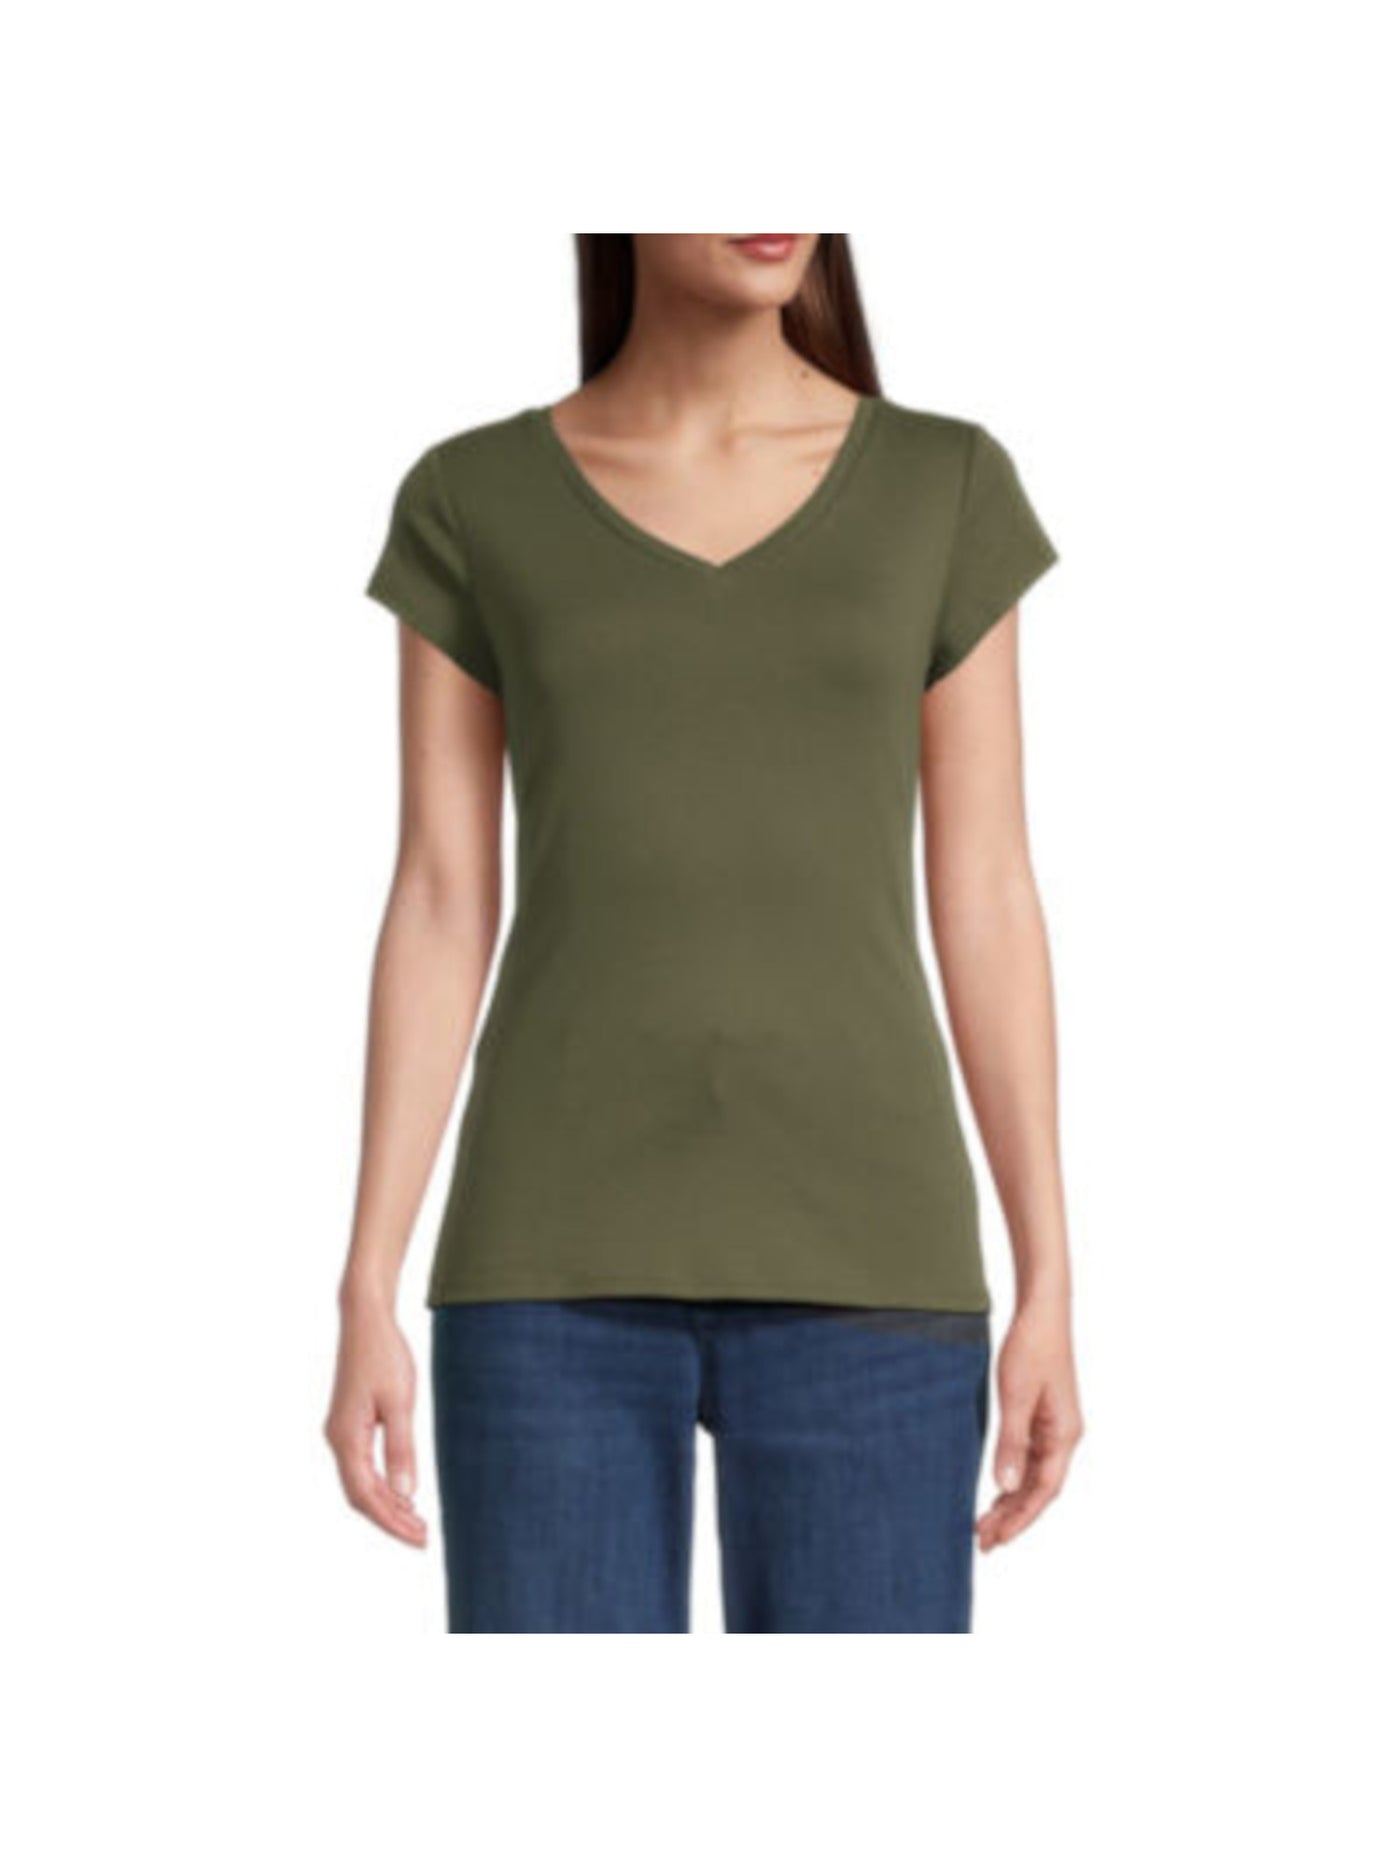 DOLAN Womens Green Stretch Ribbed Short Sleeve V Neck T-Shirt XS